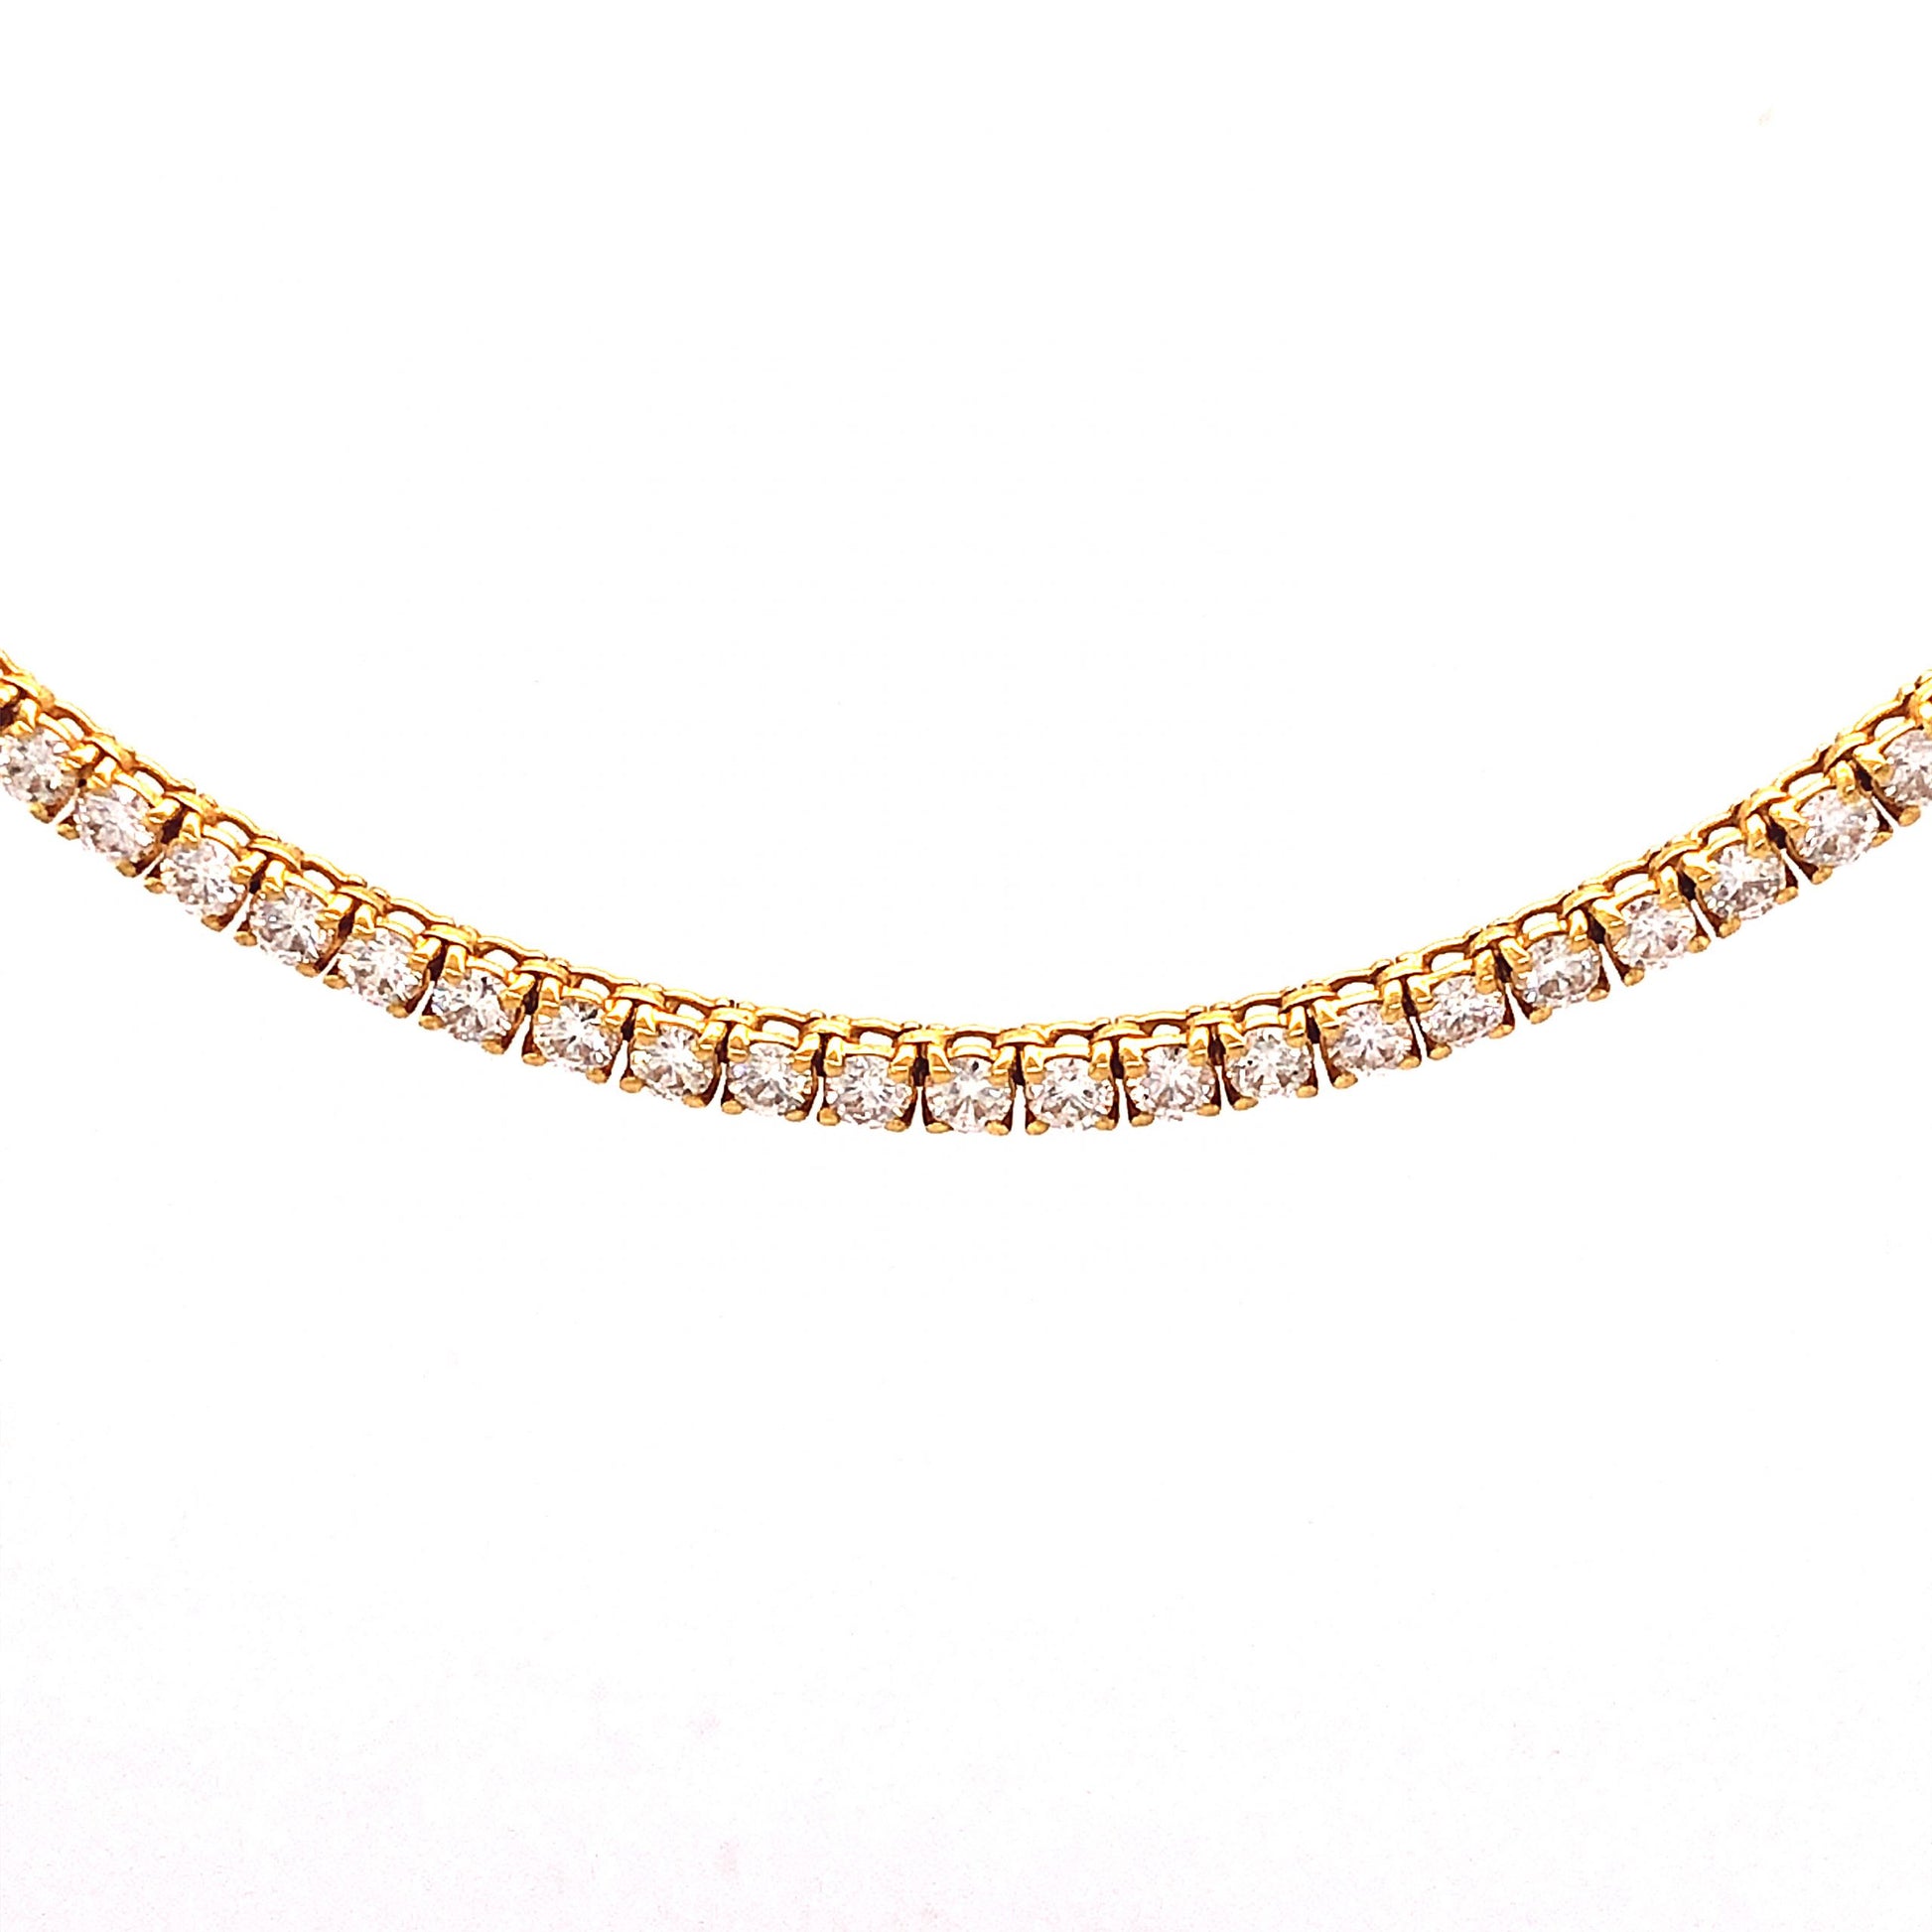 6.20 Diamond Tennis Necklace in 18k Yellow GoldComposition: 18 Karat Yellow GoldTotal Diamond Weight: 6.20 ctTotal Gram Weight: 17.0 gInscription: 750